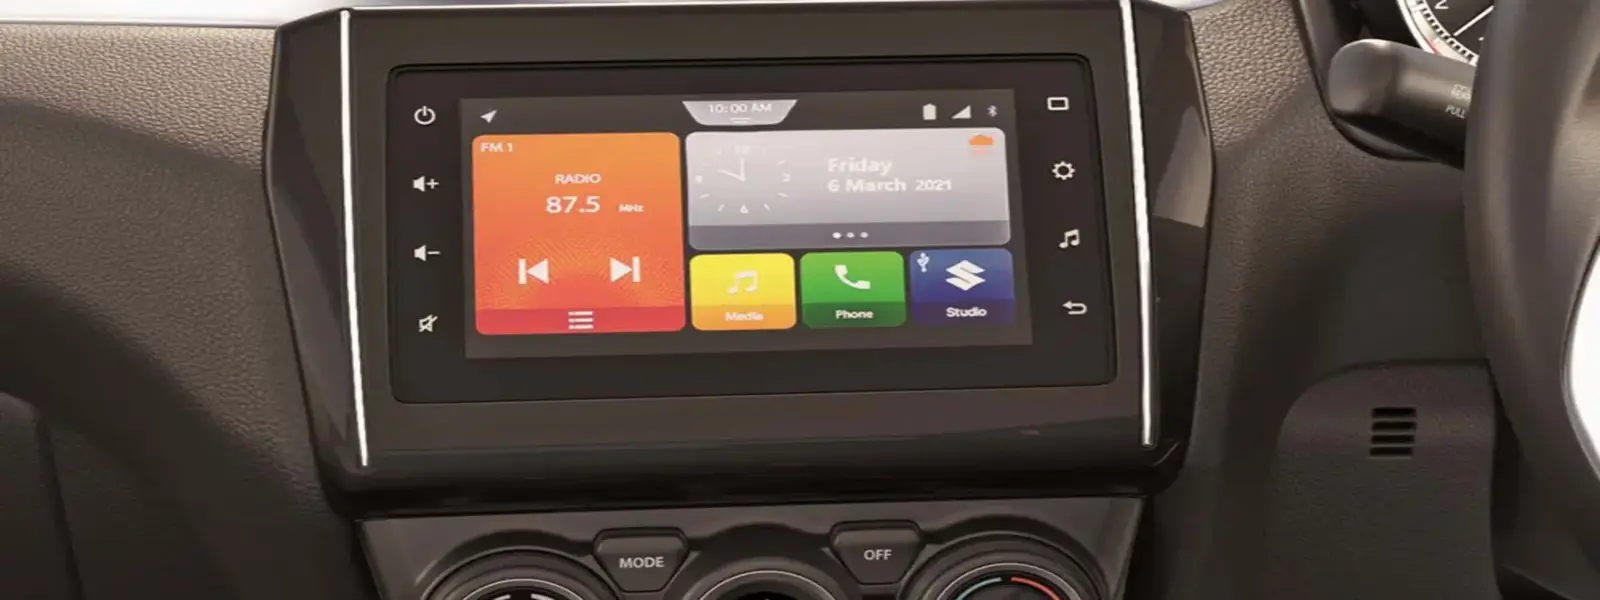 Swift- SmartPlay Infotainment System Magic Auto Karol Bagh, New Delhi